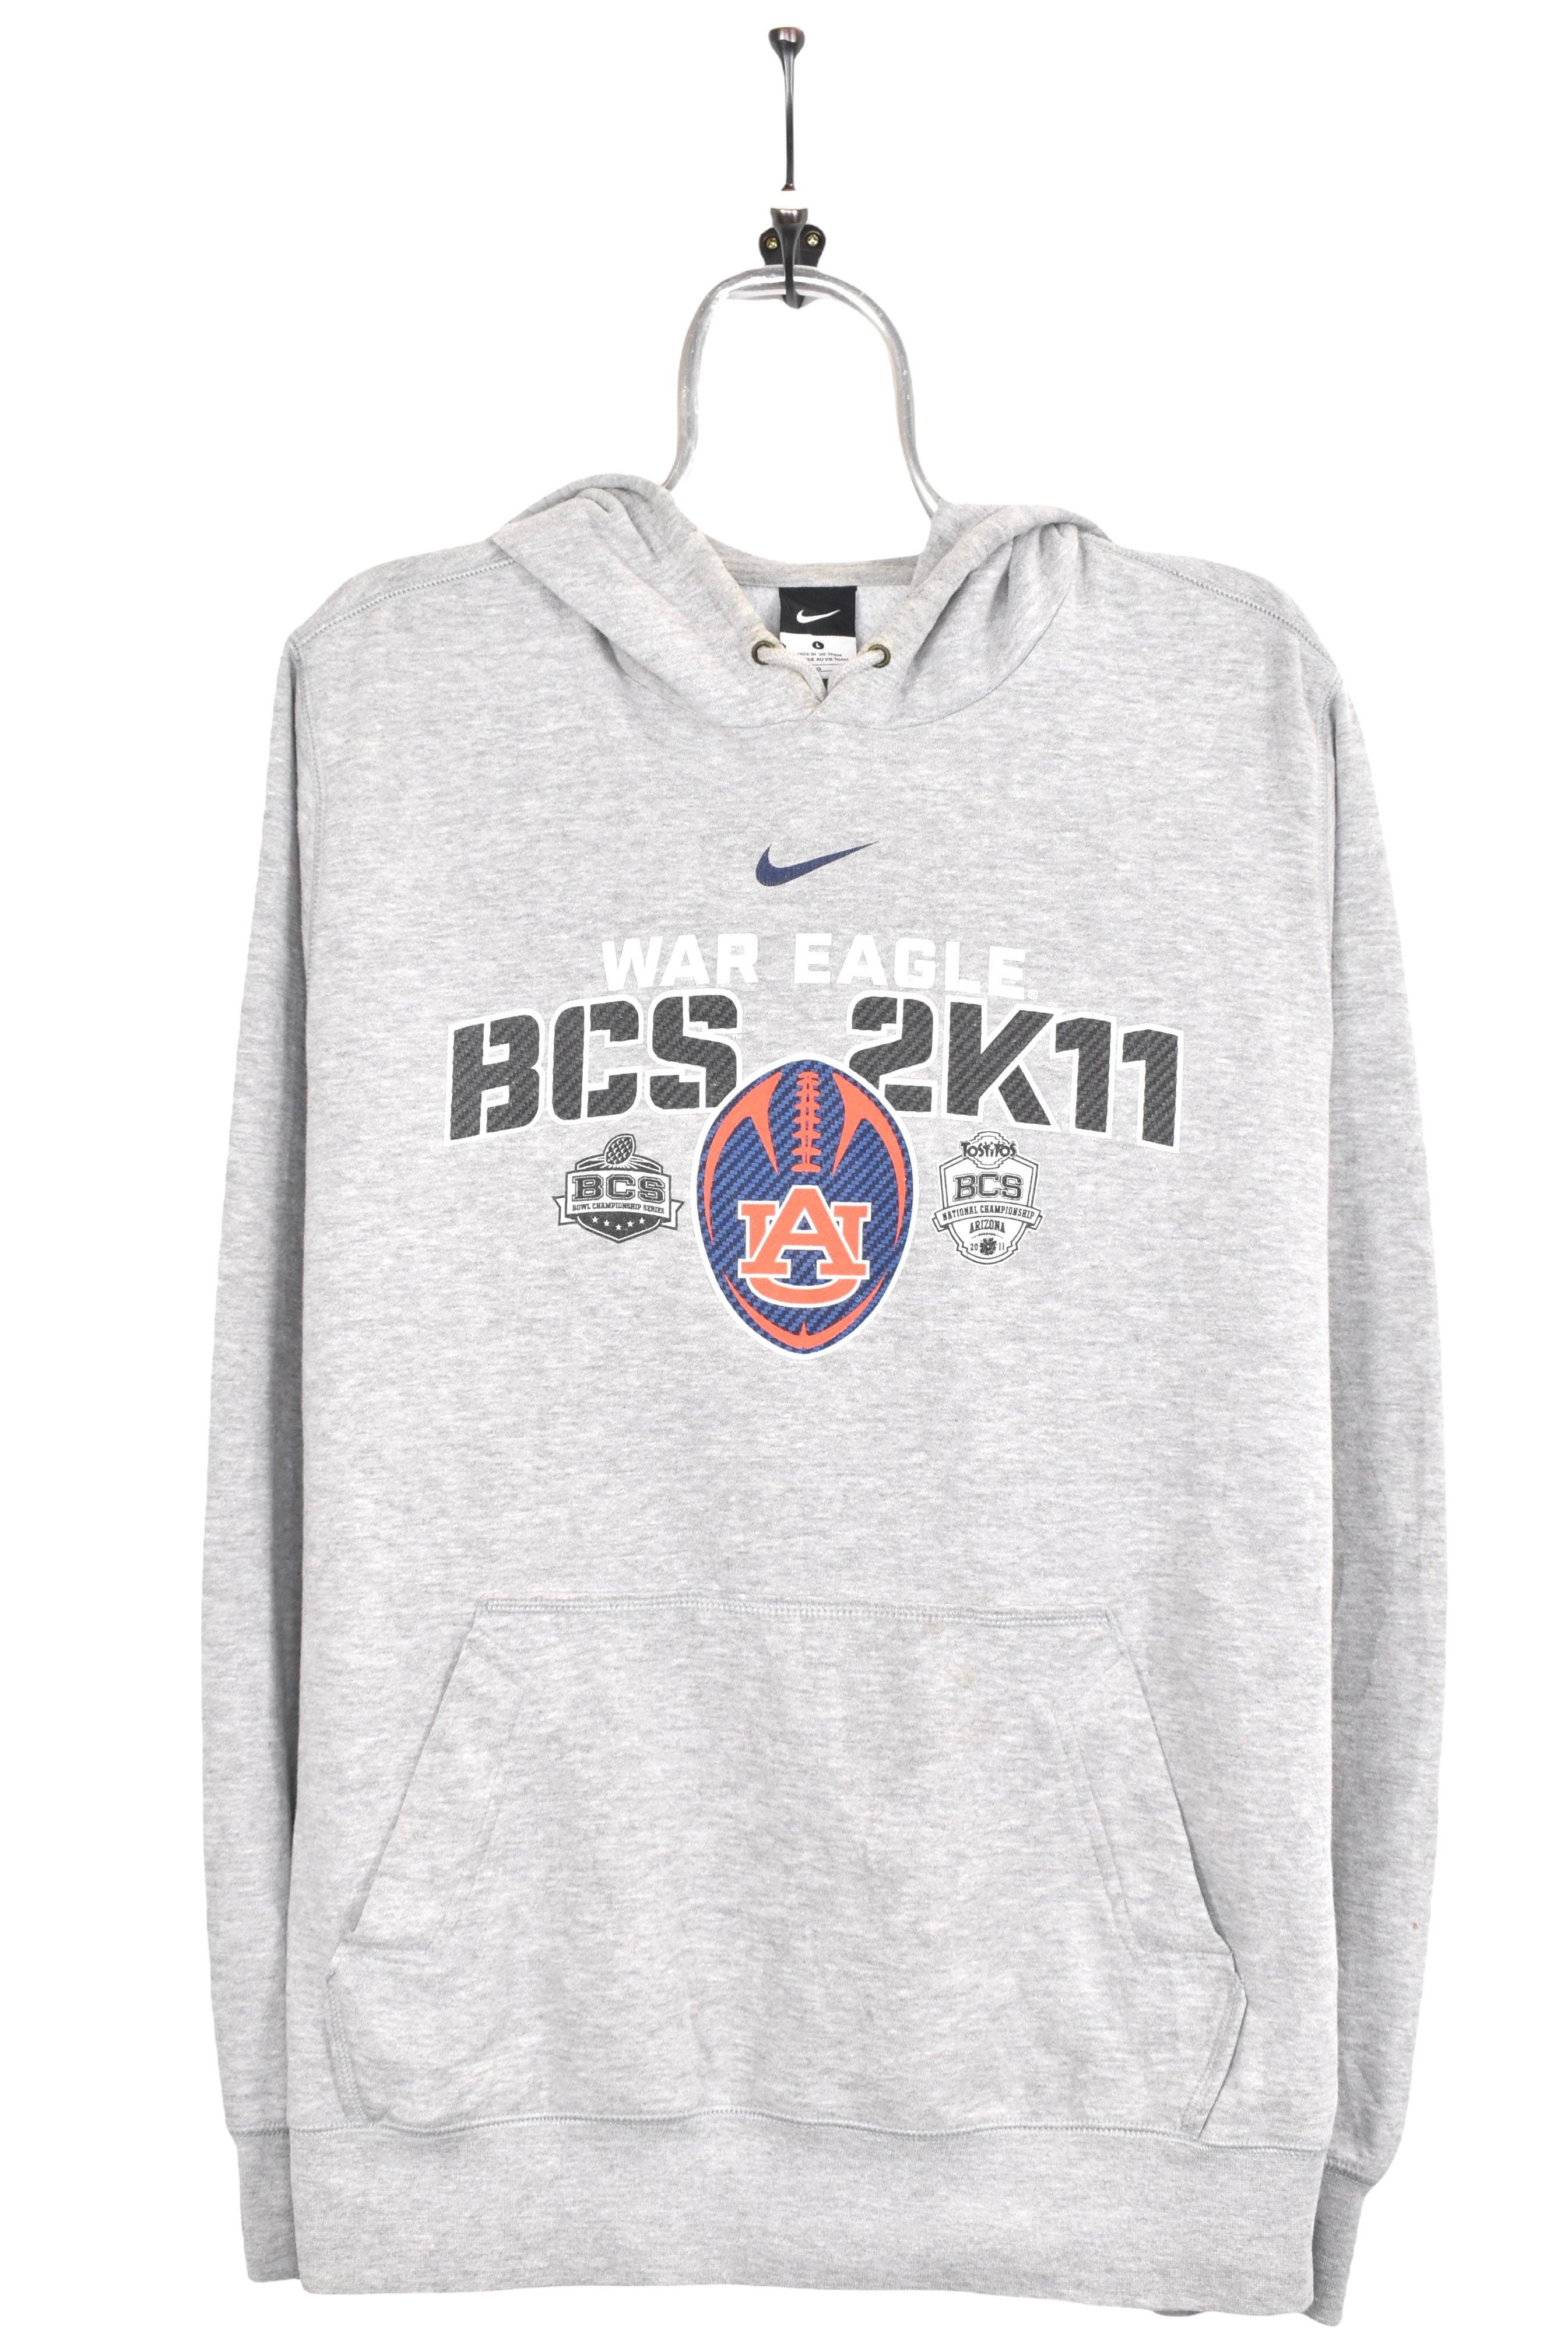 Modern Nike hoodie, 2011 BCS Championship football graphic sweatshirt - AU L COLLEGE